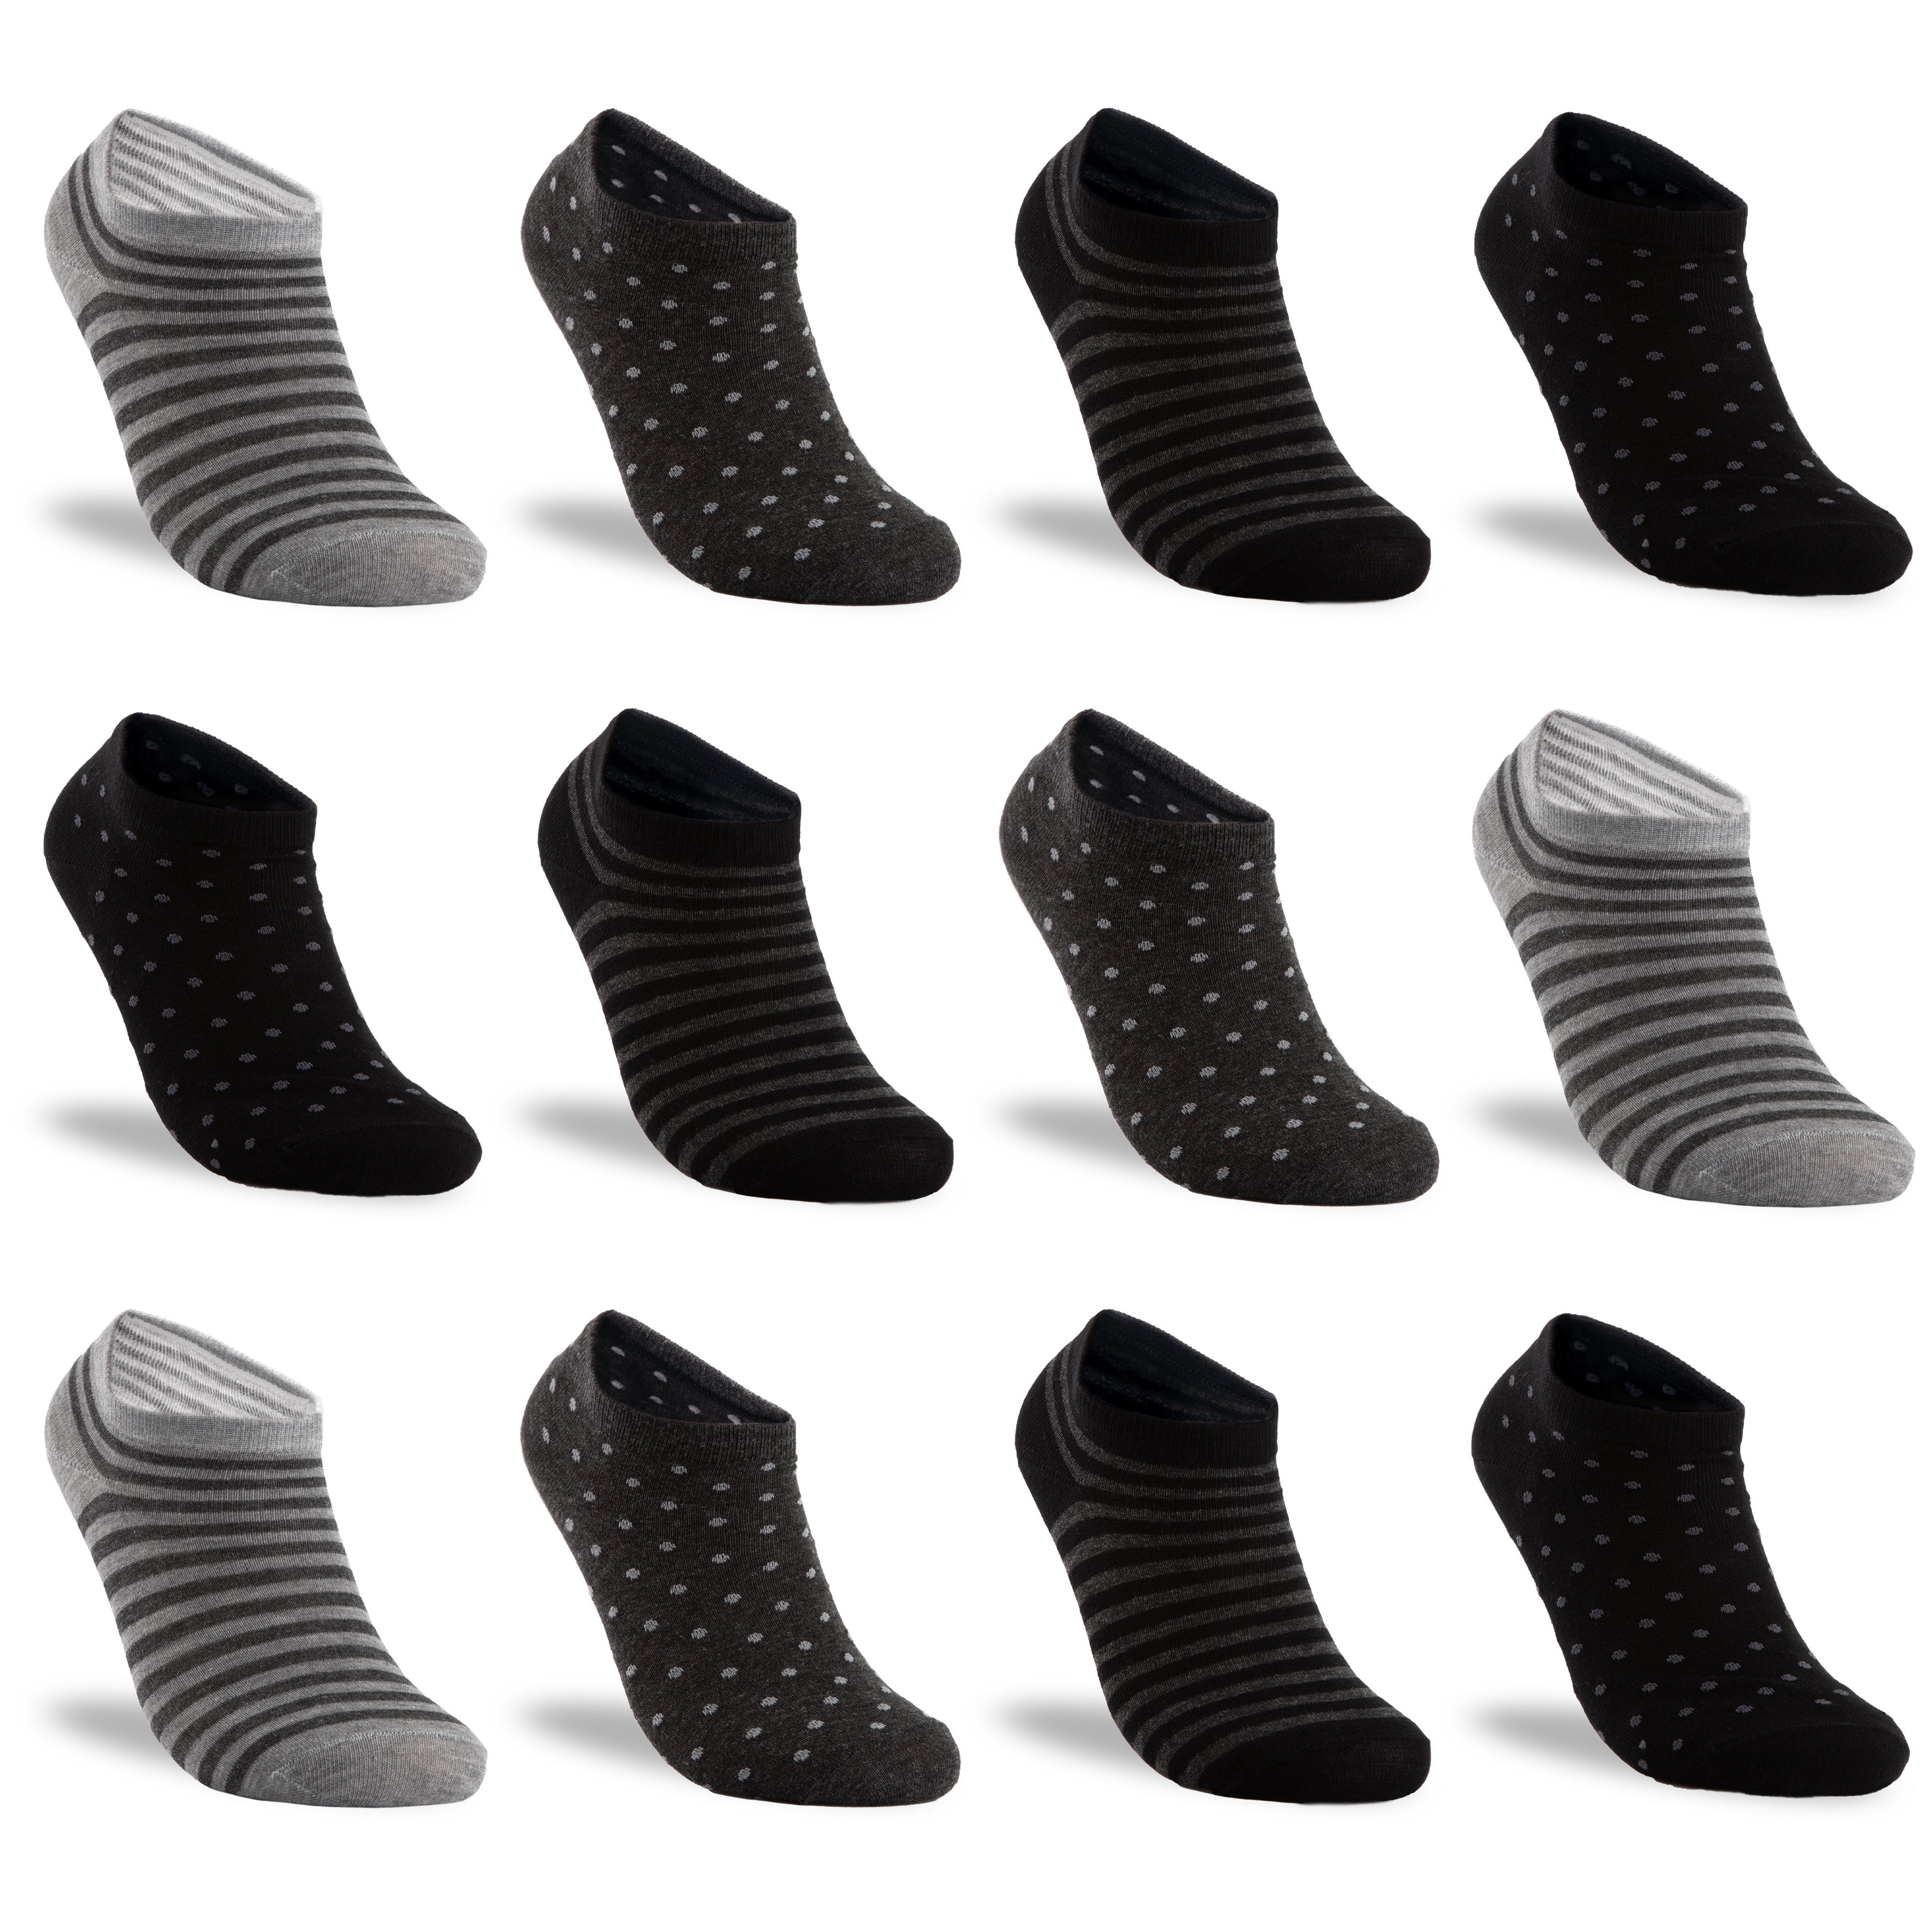 TEXEMP Sneakersocken 6, 12, 18 Paar Damen Sneaker Socken Kinder Baumwolle Freizeit Sport (Packung, 6-Paar) 90% Baumwolle Model 2